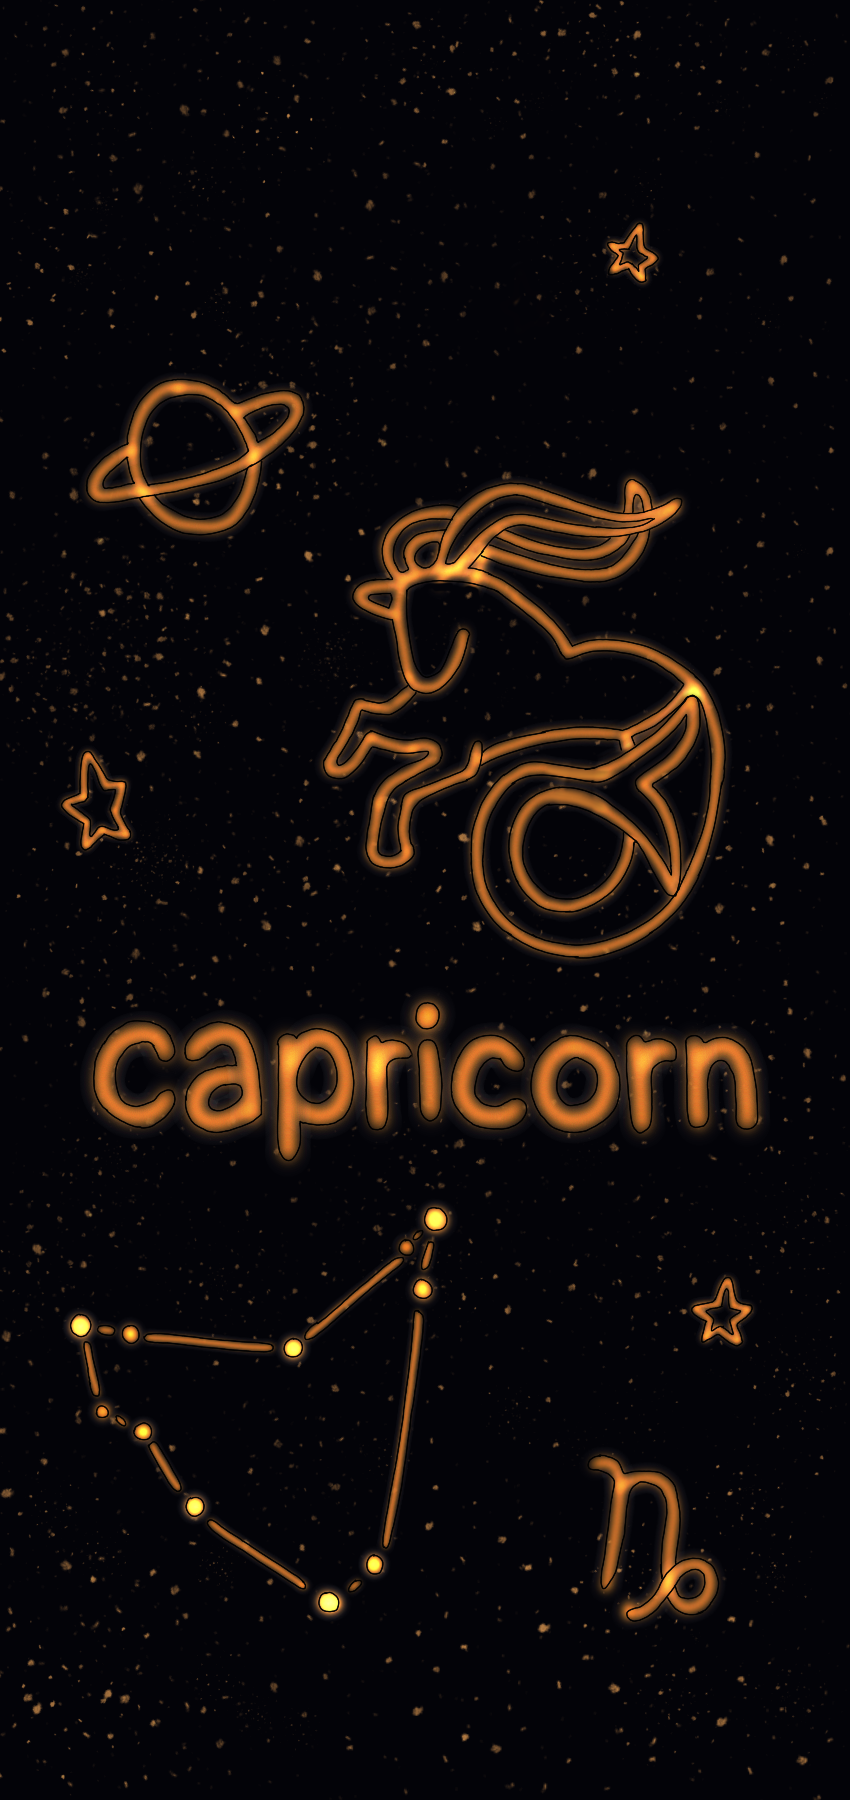 Capricorn Zodiac Sign Wallpaper iPhone. Capricorn aesthetic, Zodiac capricorn, Capricorn constellation tattoo